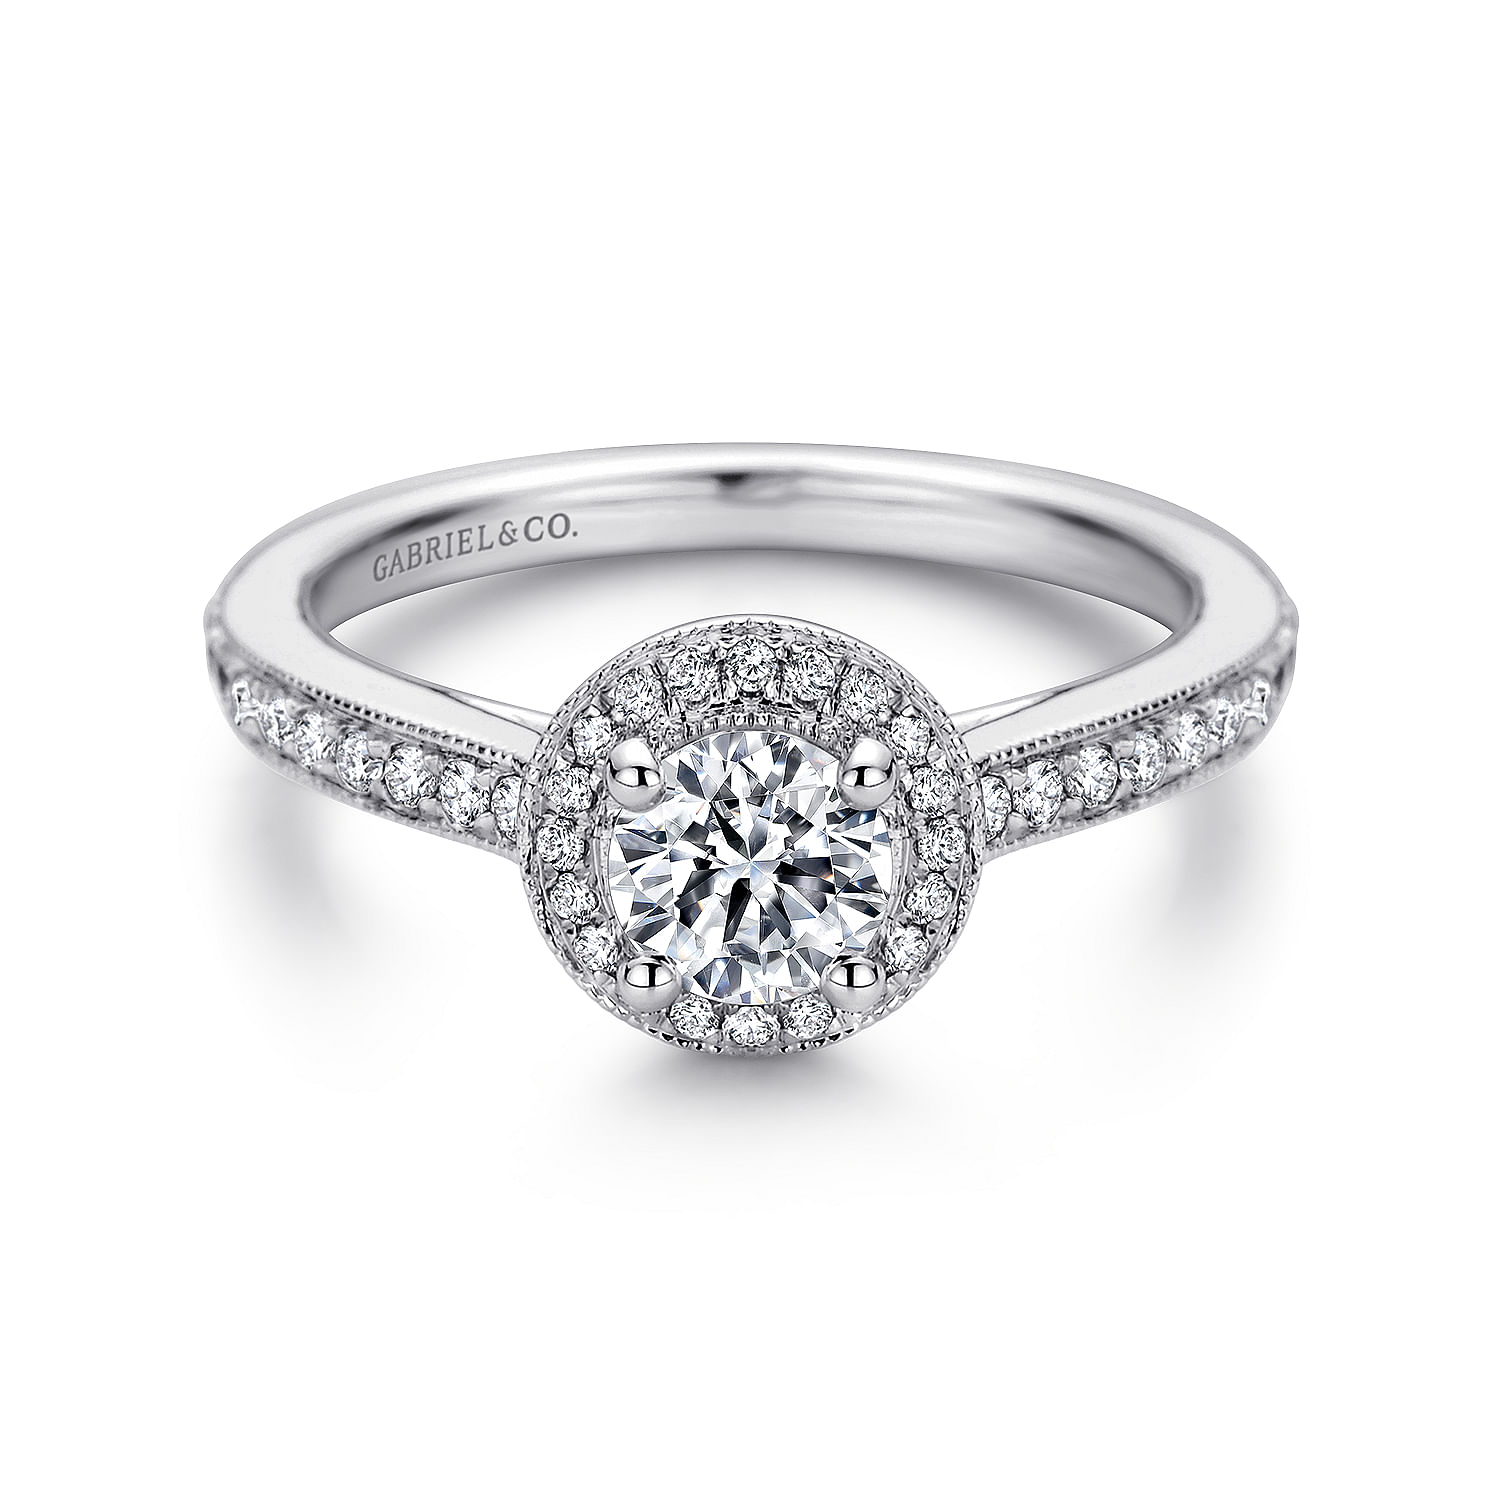 Corinne---Vintage-Inspired-14K-White-Gold-Round-Halo-Diamond-Engagement-Ring1